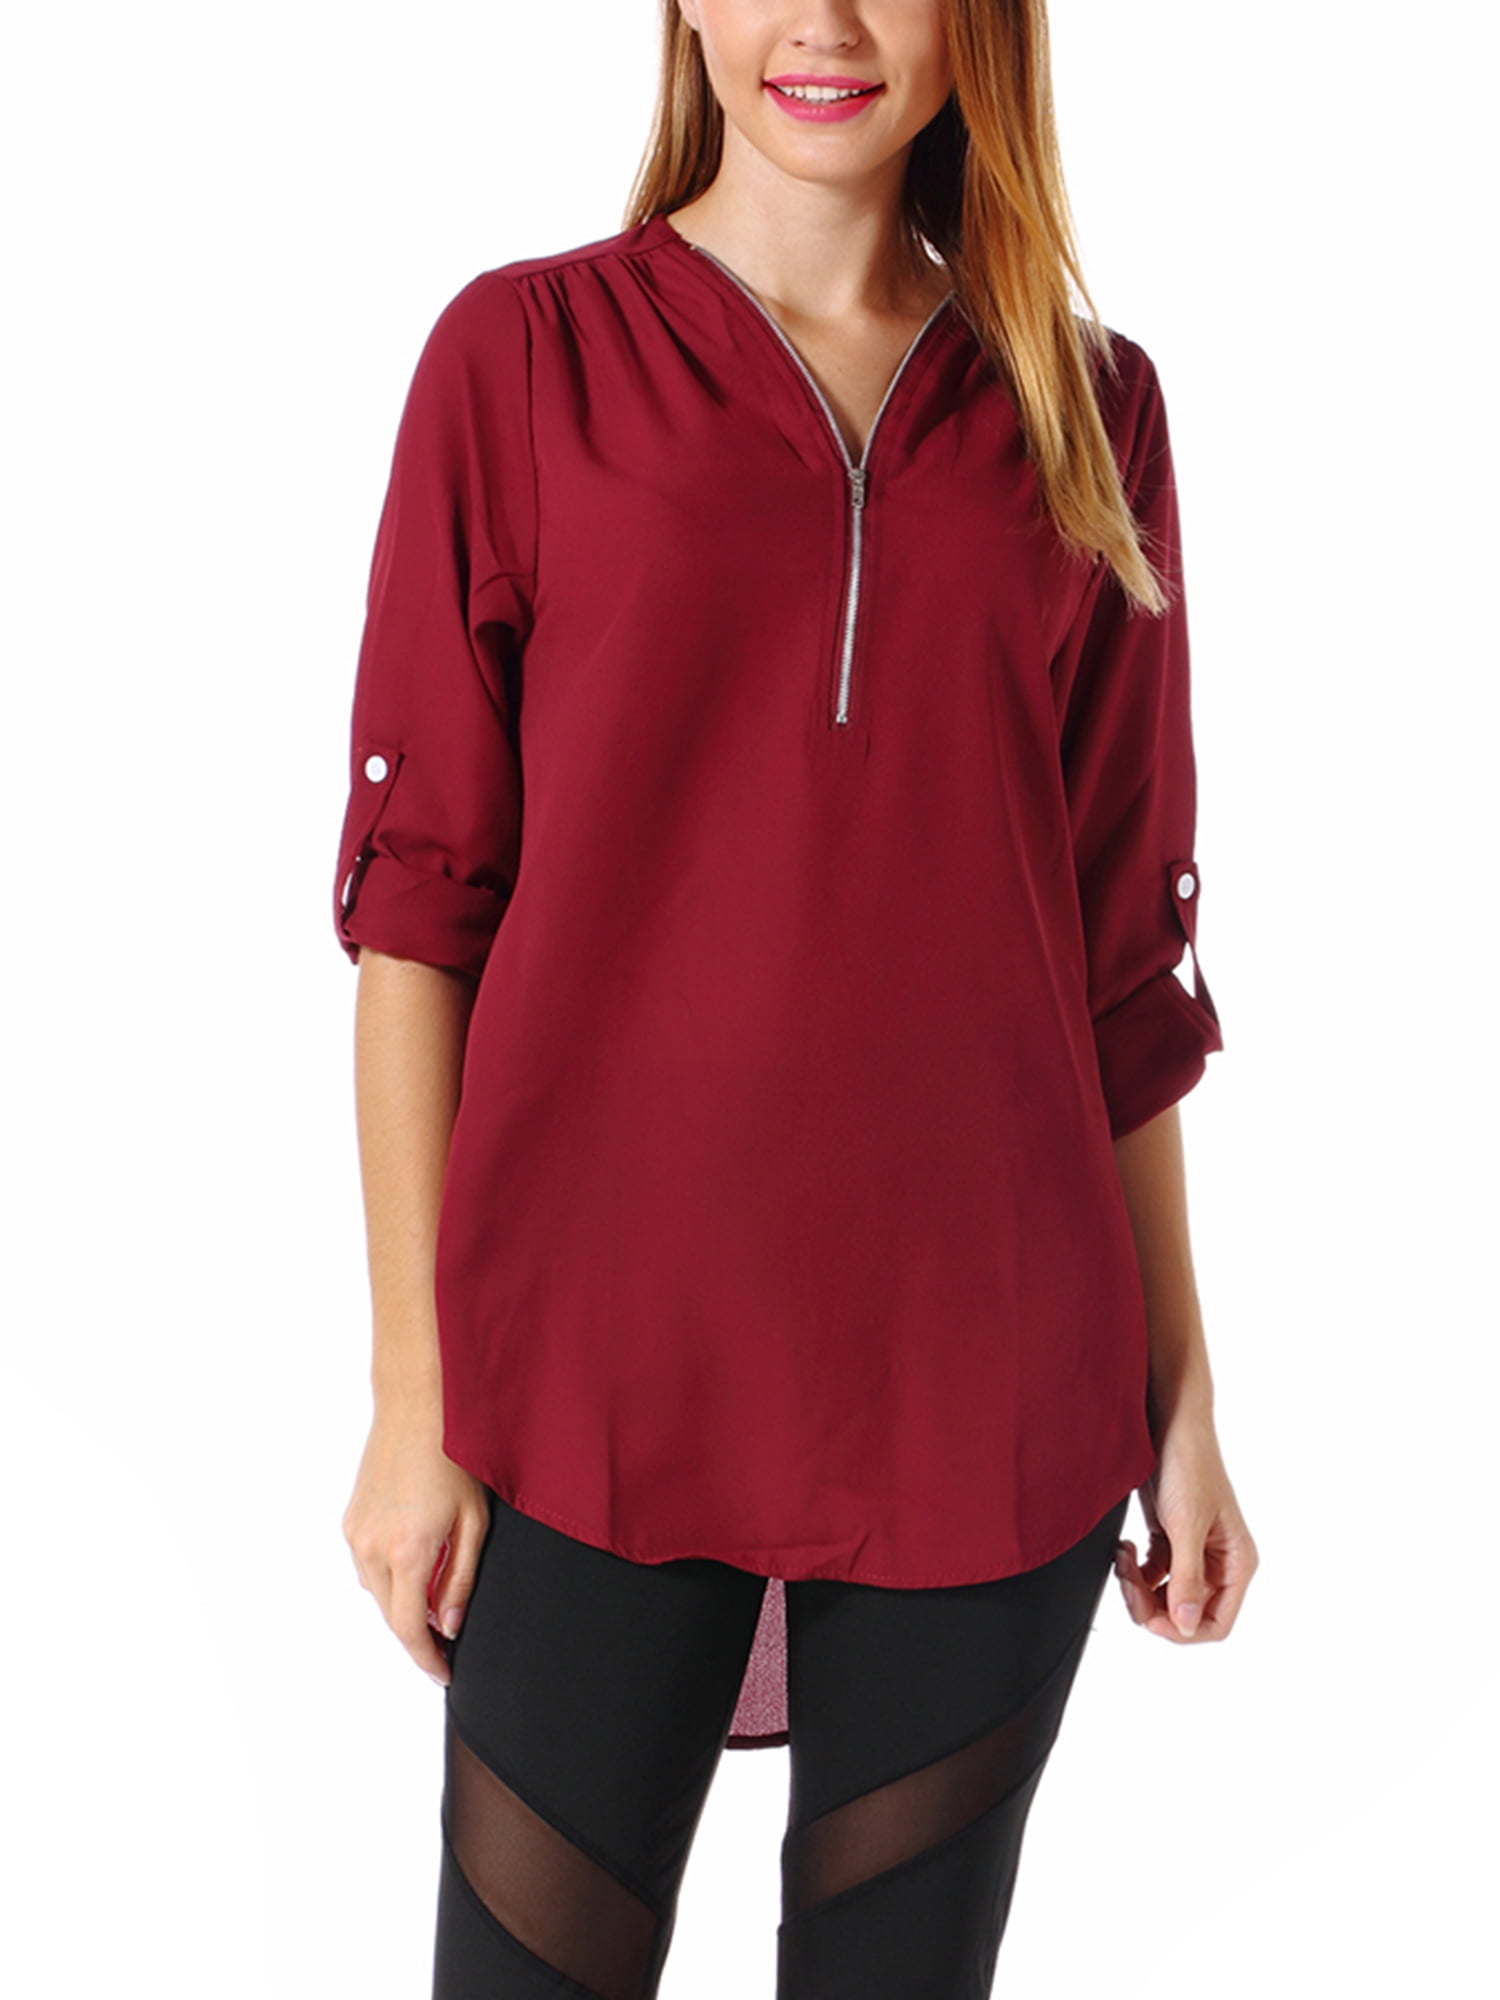 Lethez Oversized Cross Bandage V Neck Blouse for Women Plus Size Short Sleeve T-Shirt Top Tunic 